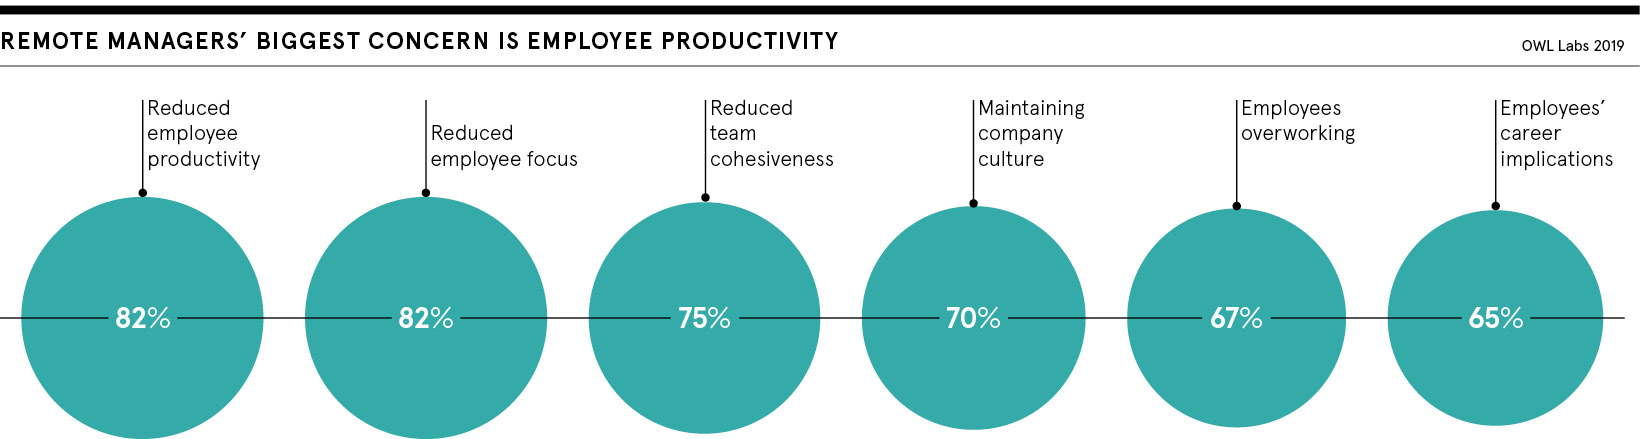 Employee productivity